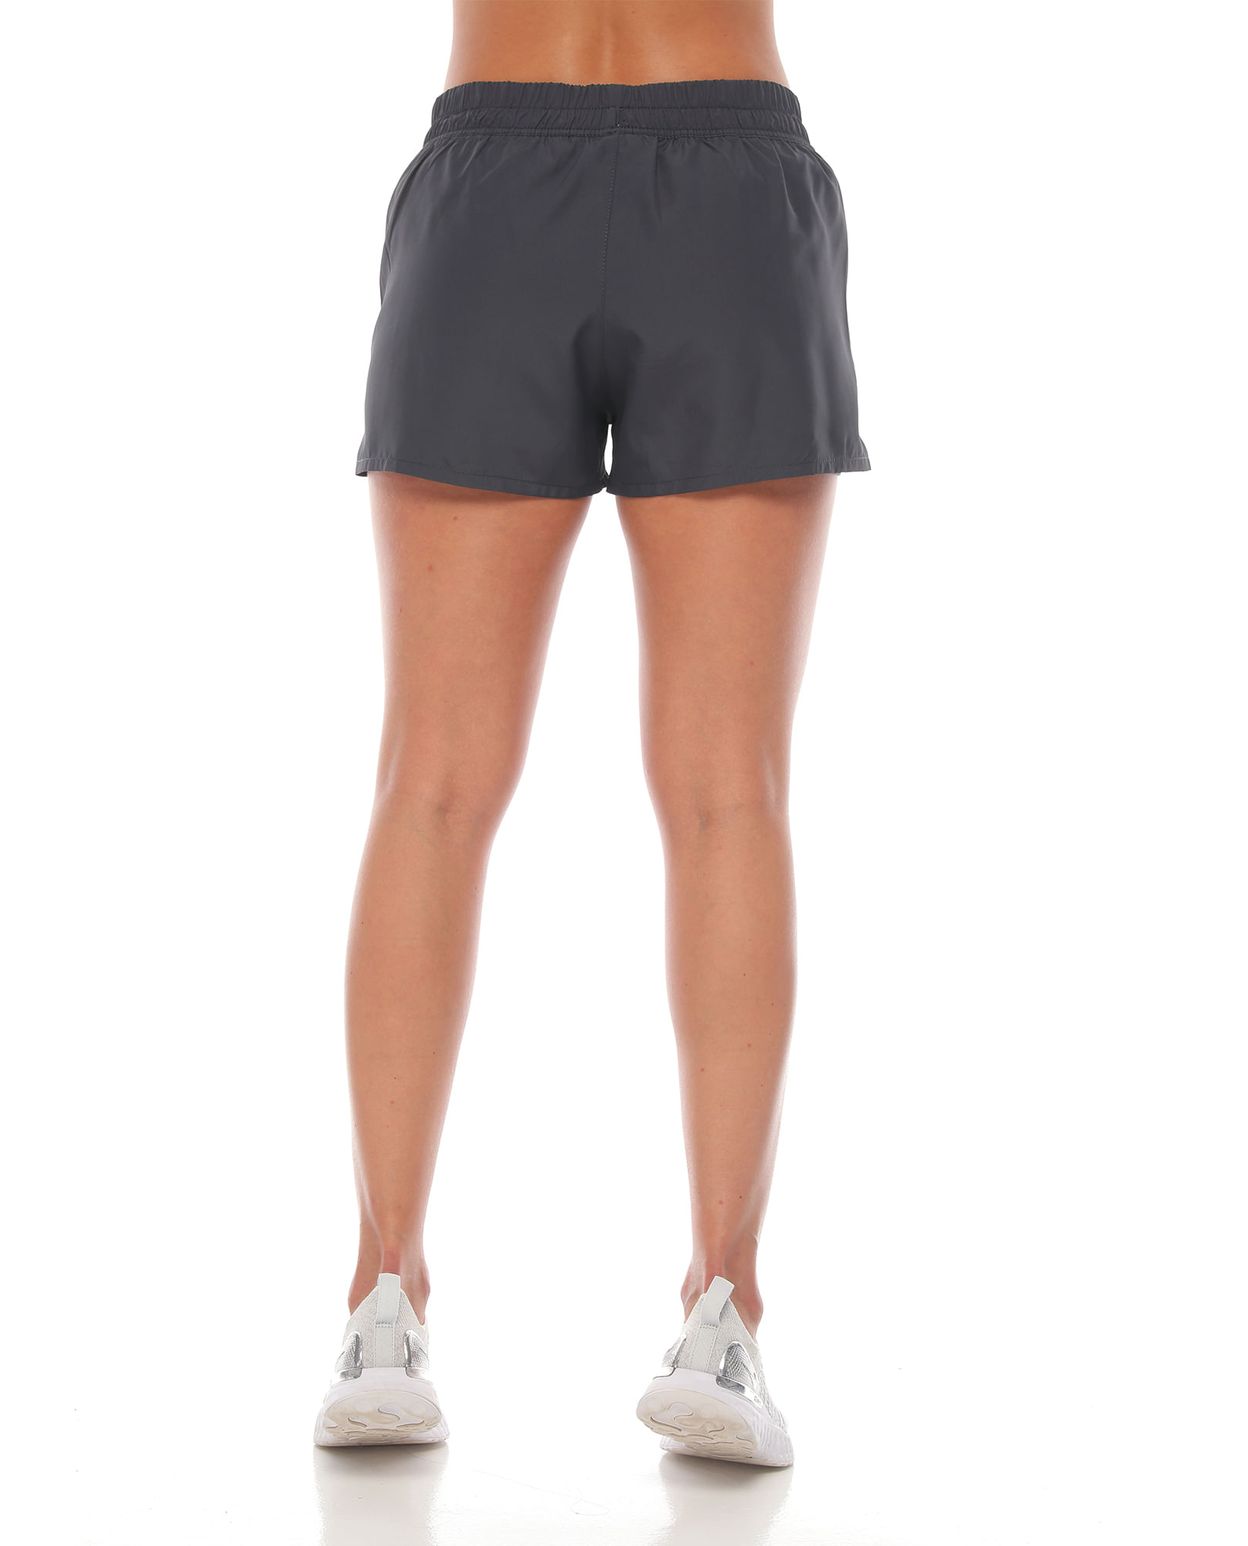 pantaloneta running deportiva color gris con fit interior para mujer parte trasera